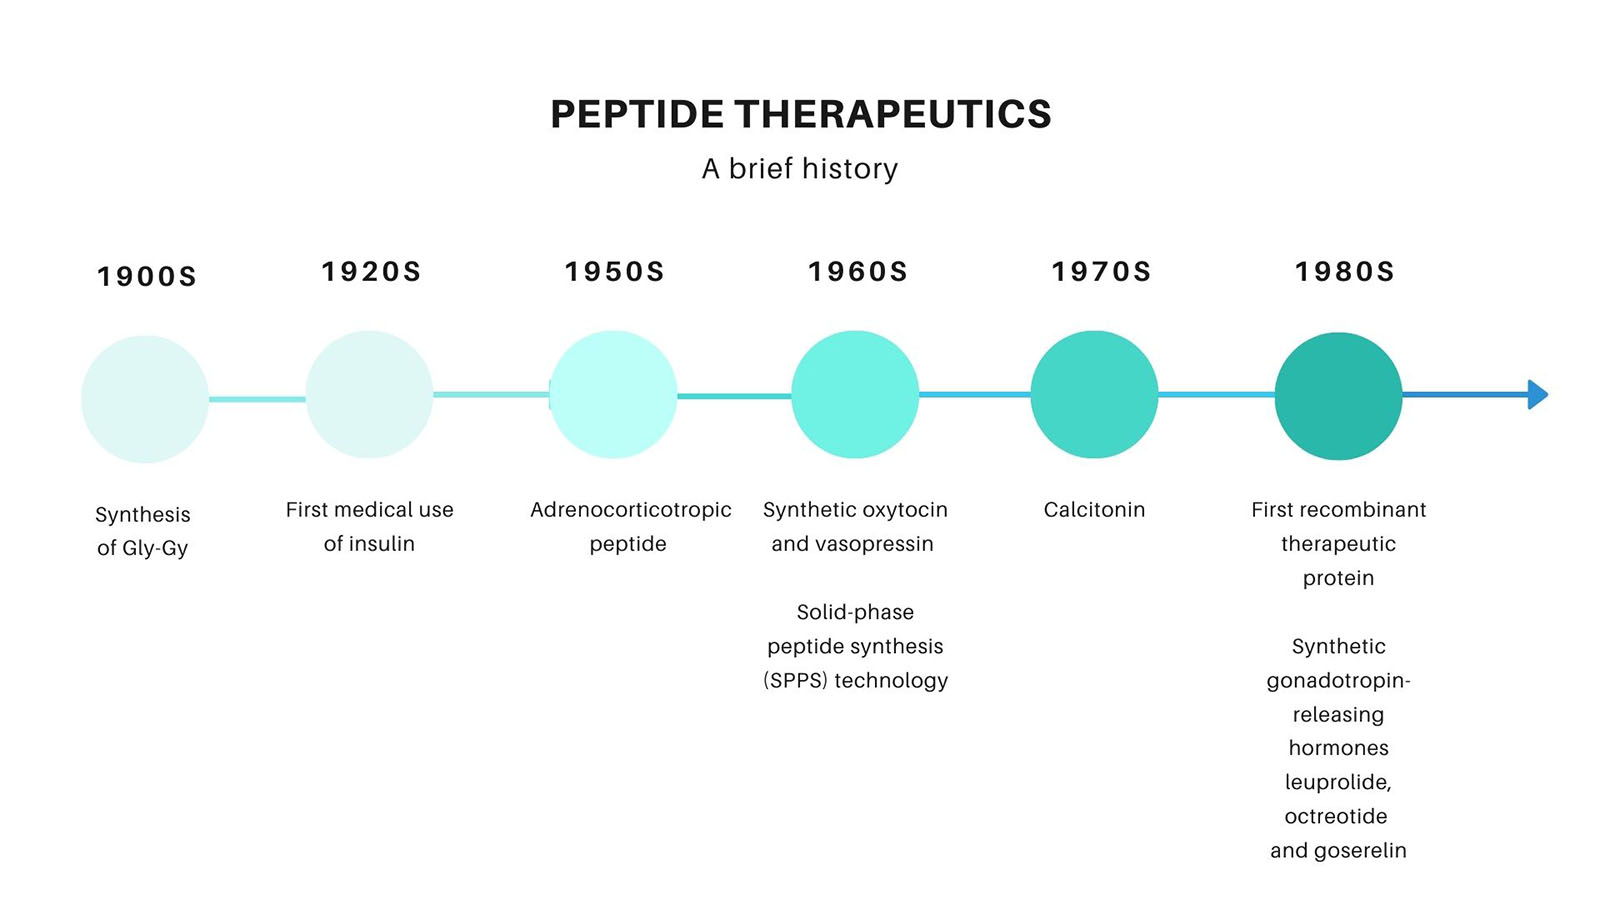 History of peptide therapeutics